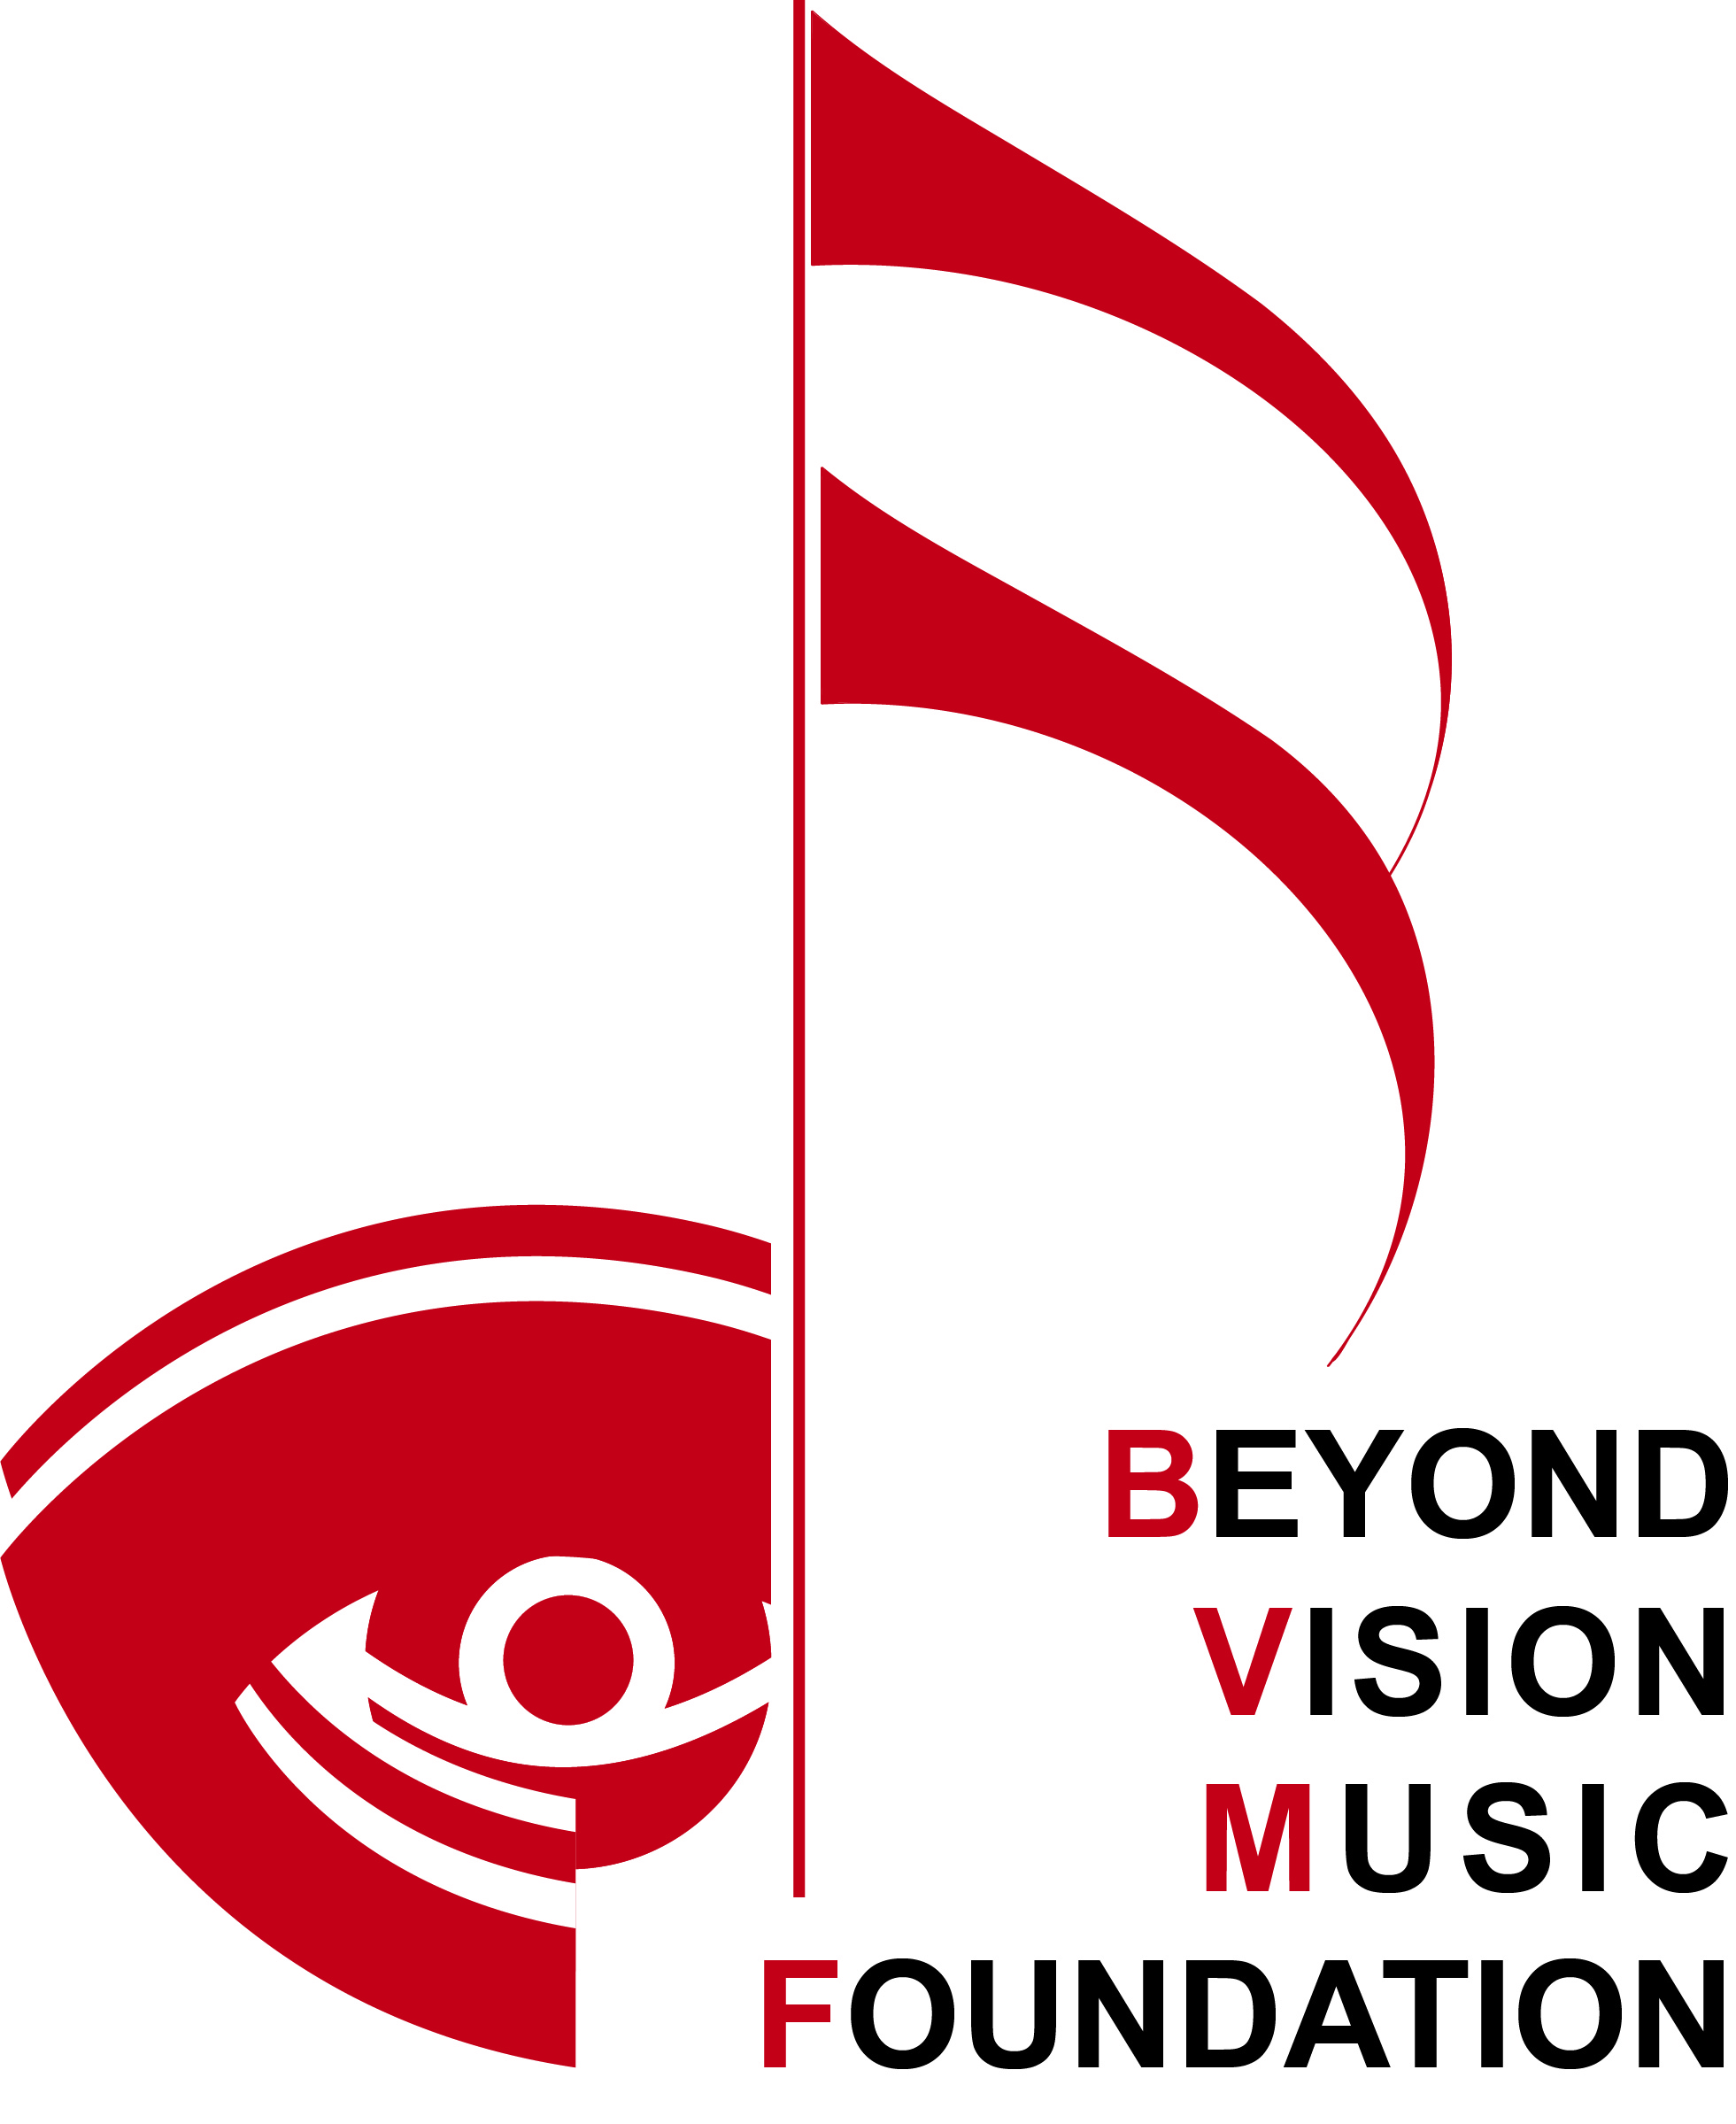 Beyond Vision Music Foundation (BVMF) logo